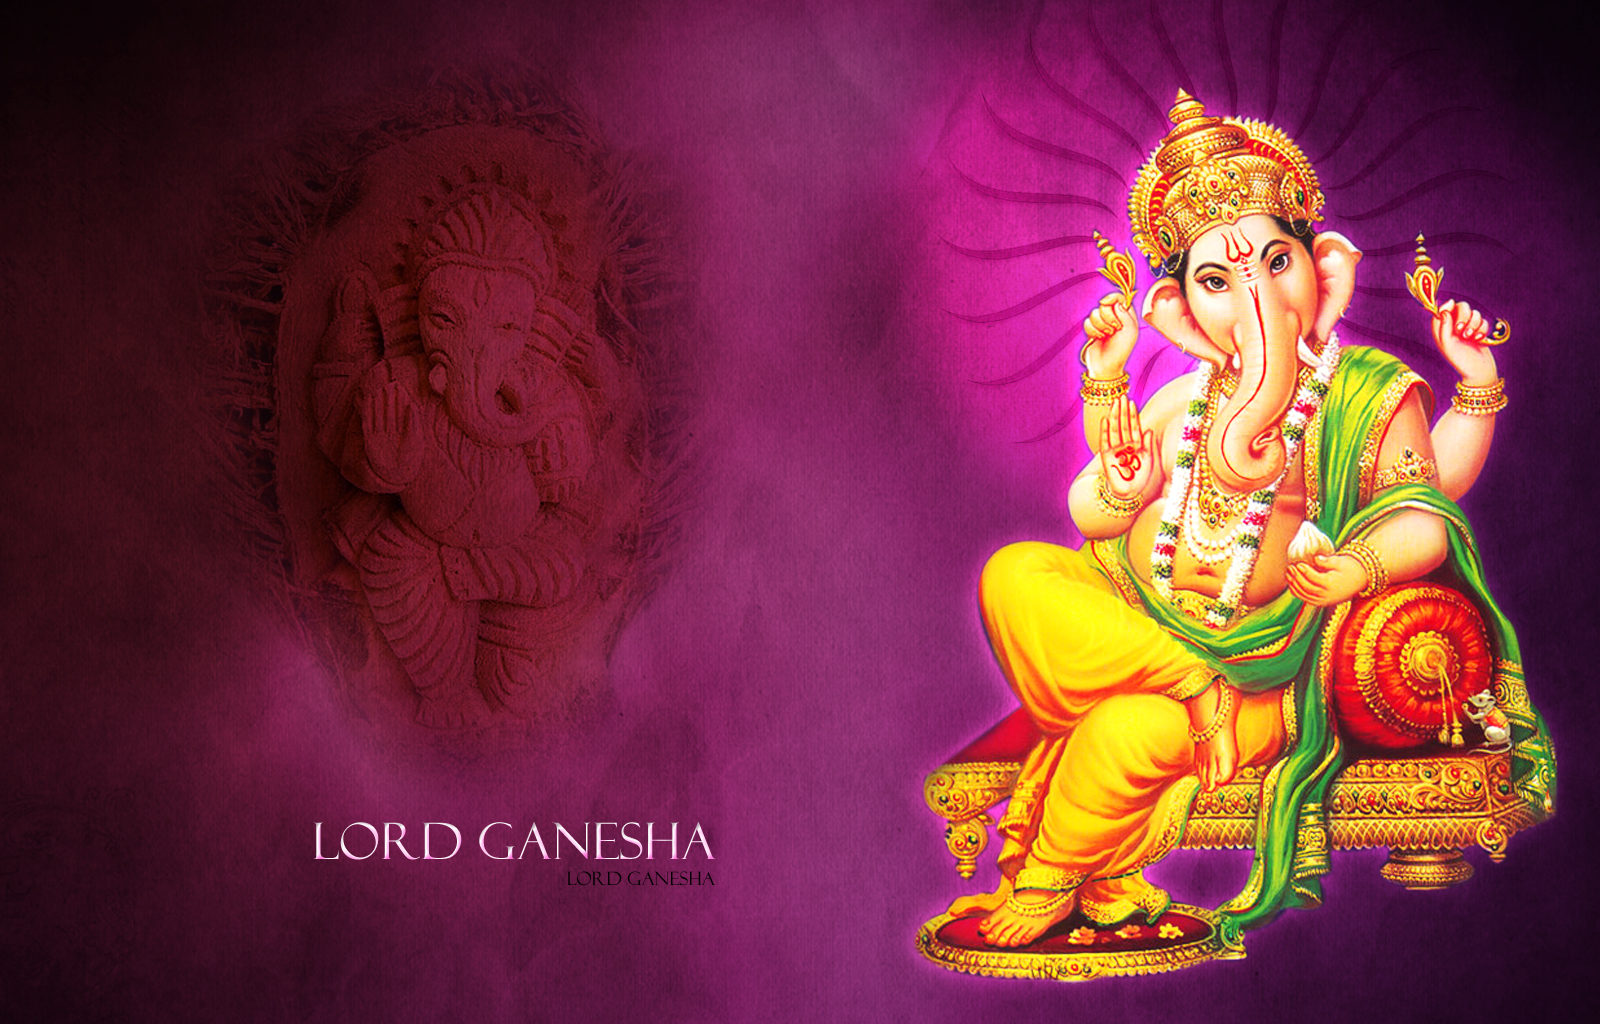 Ganesha Images Lord Ganesha Wallpapers Ganesha Pictures